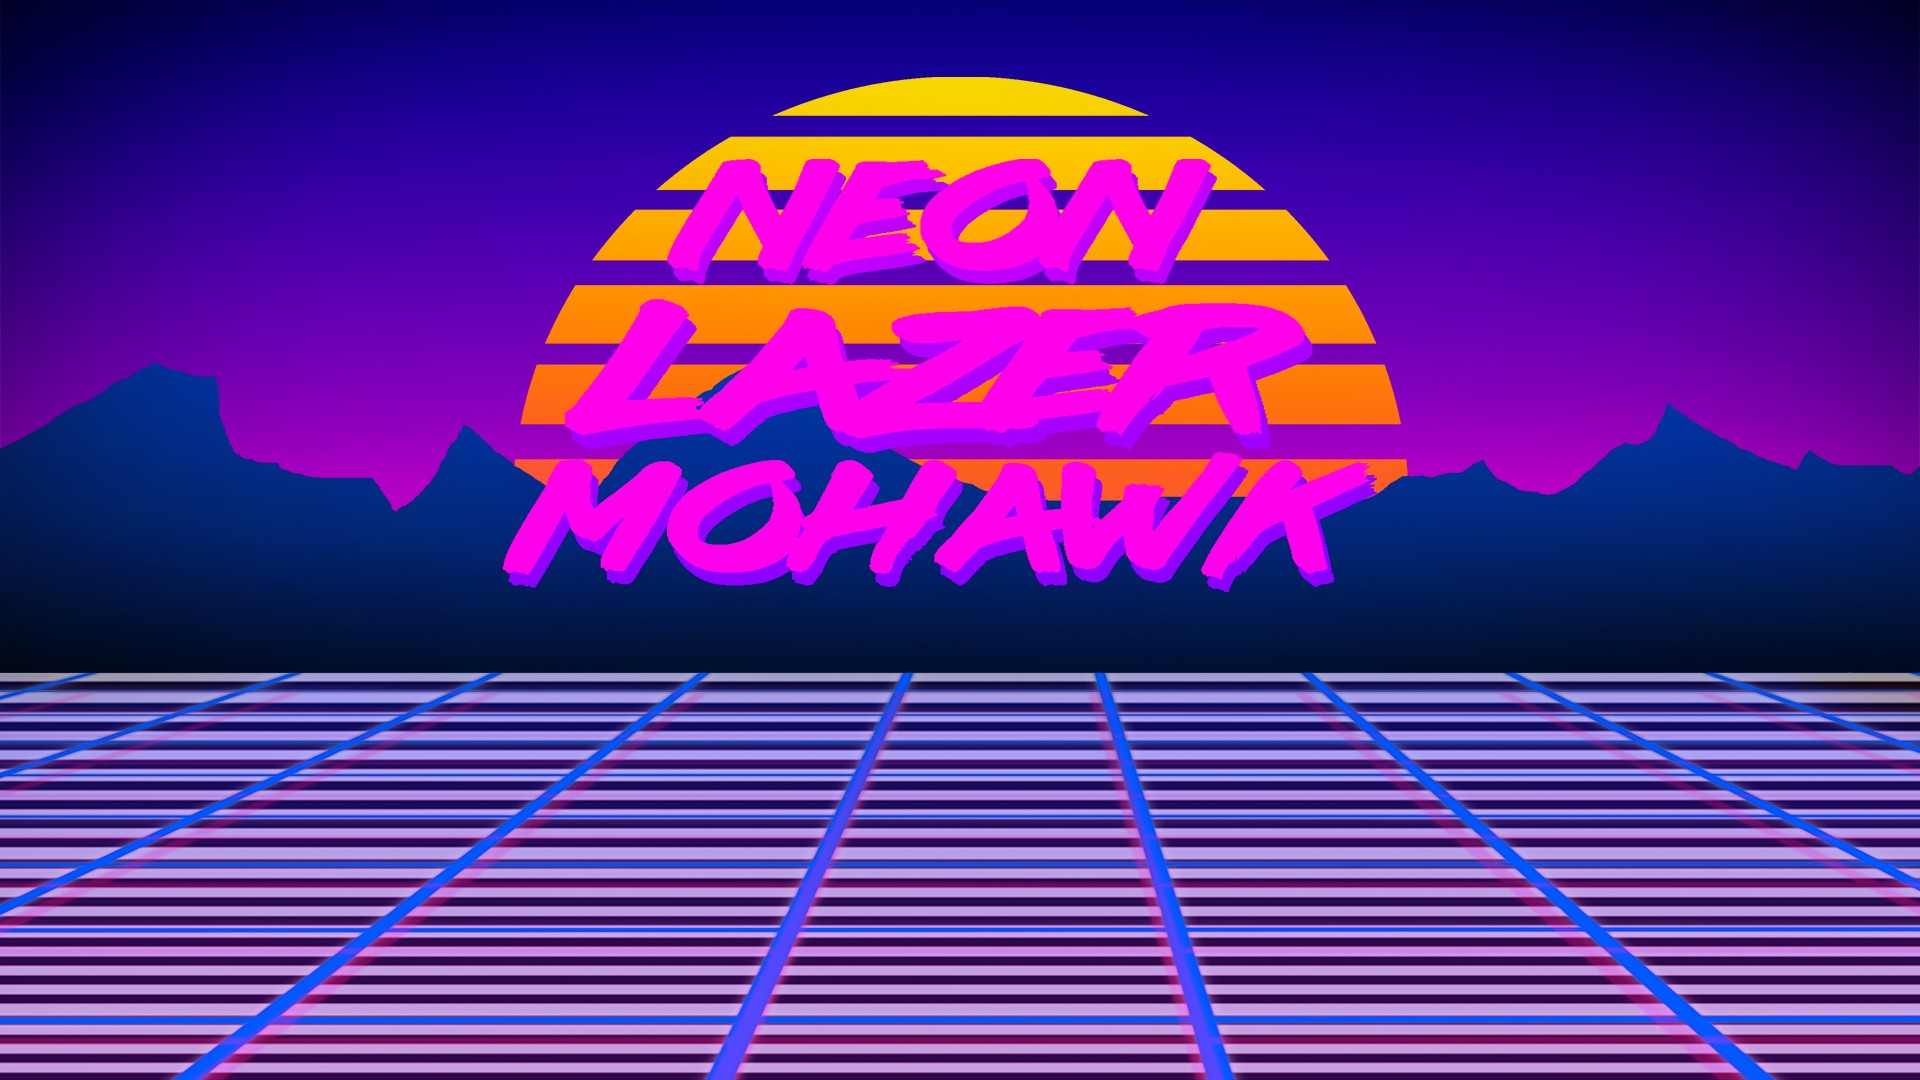 General 1920x1080 Neon Lazer Mohawk 1980s retro games robot grid digital art sunset Sun colorful text New Retro Wave synthwave neon Digital Grid